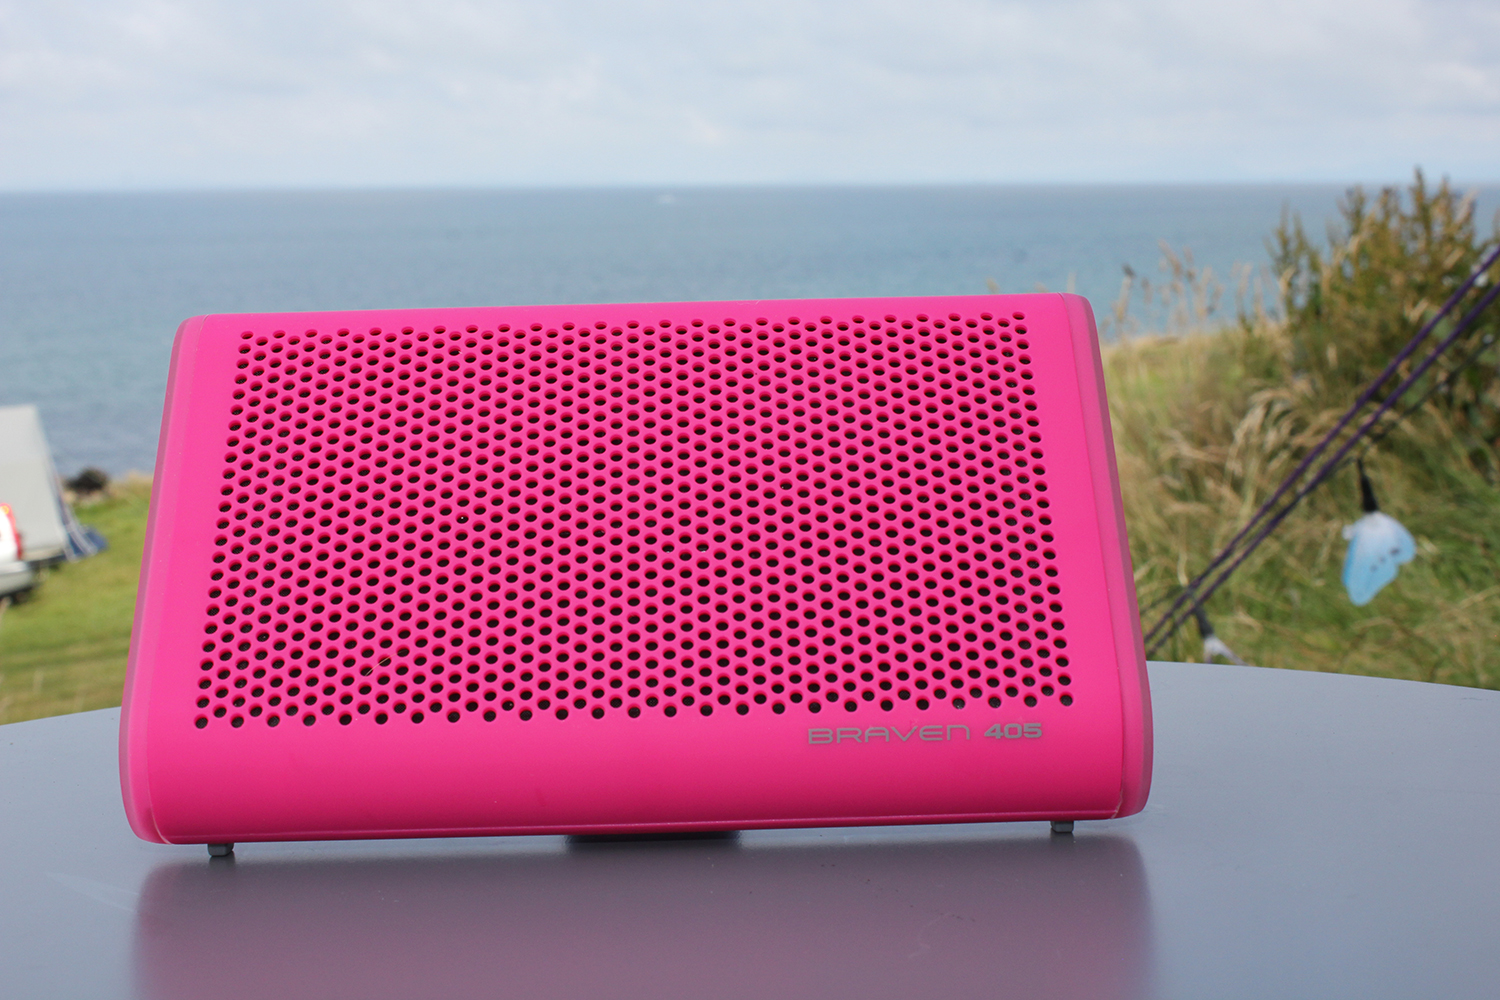 Braven 405 Waterproof Bluetooth Speaker Review